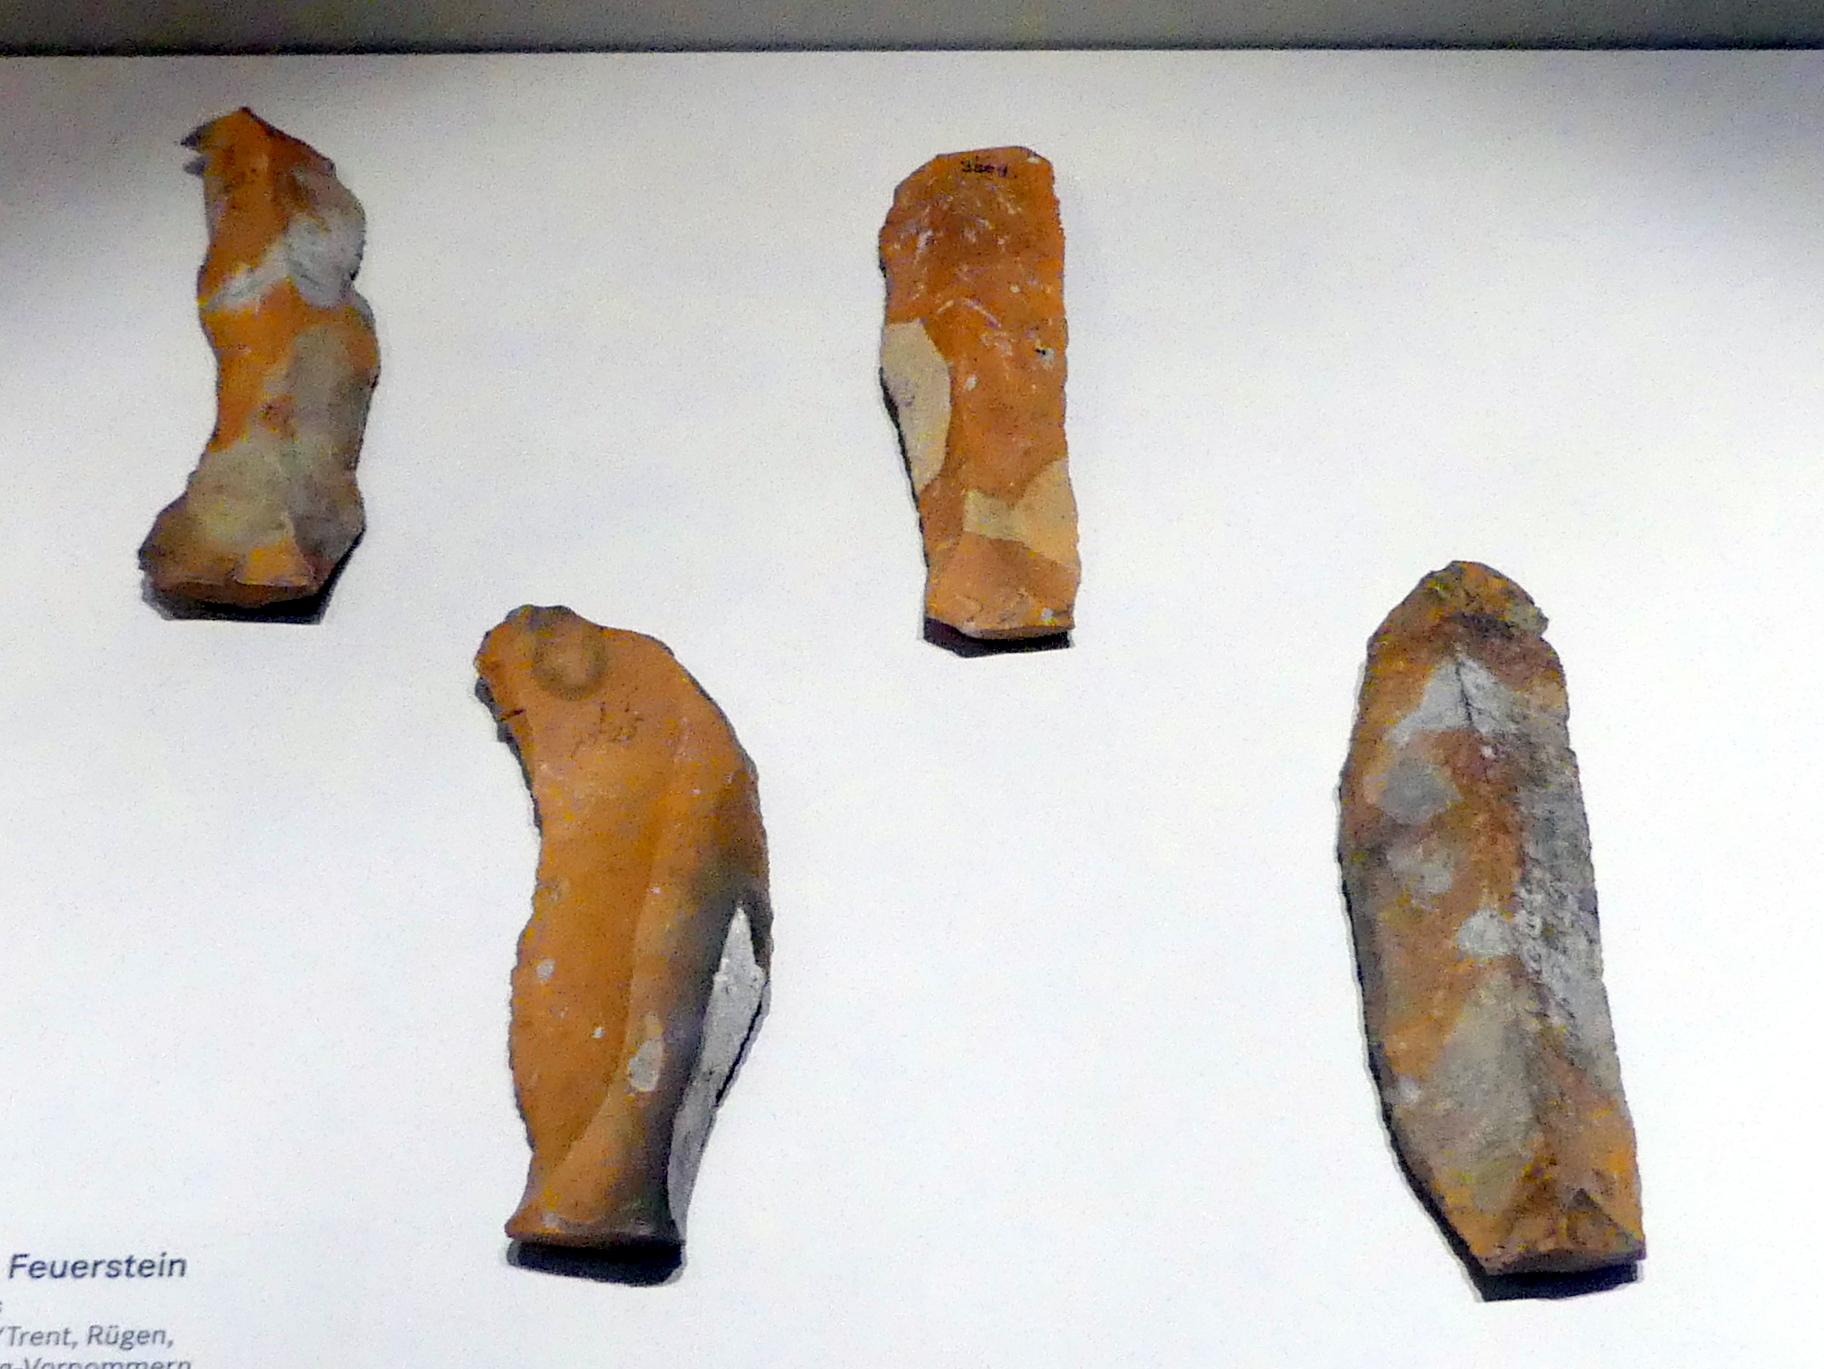 Klingen, Nordisches Neolithikum, 4400 - 2350 v. Chr., 3500 - 2800 v. Chr., Bild 1/2